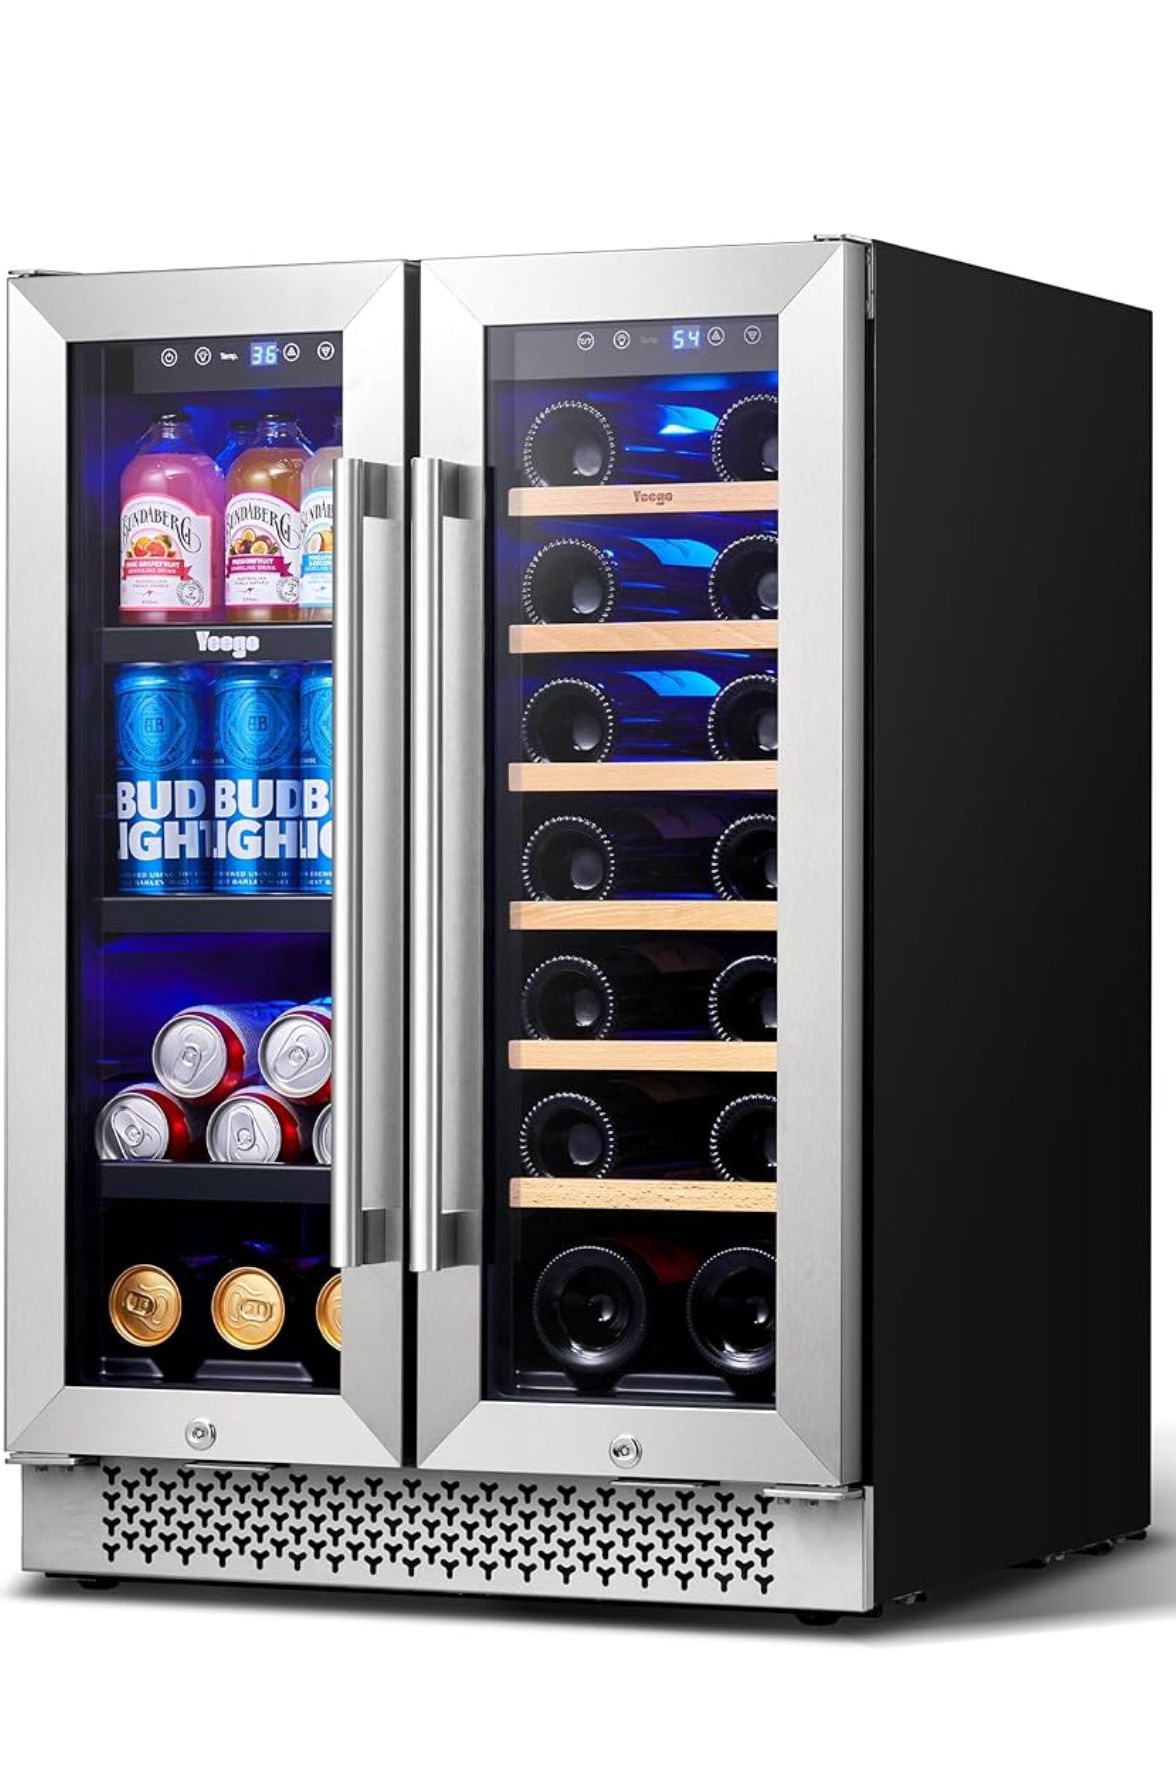 Brand New Yeego wine And Beverage Refrigerator 